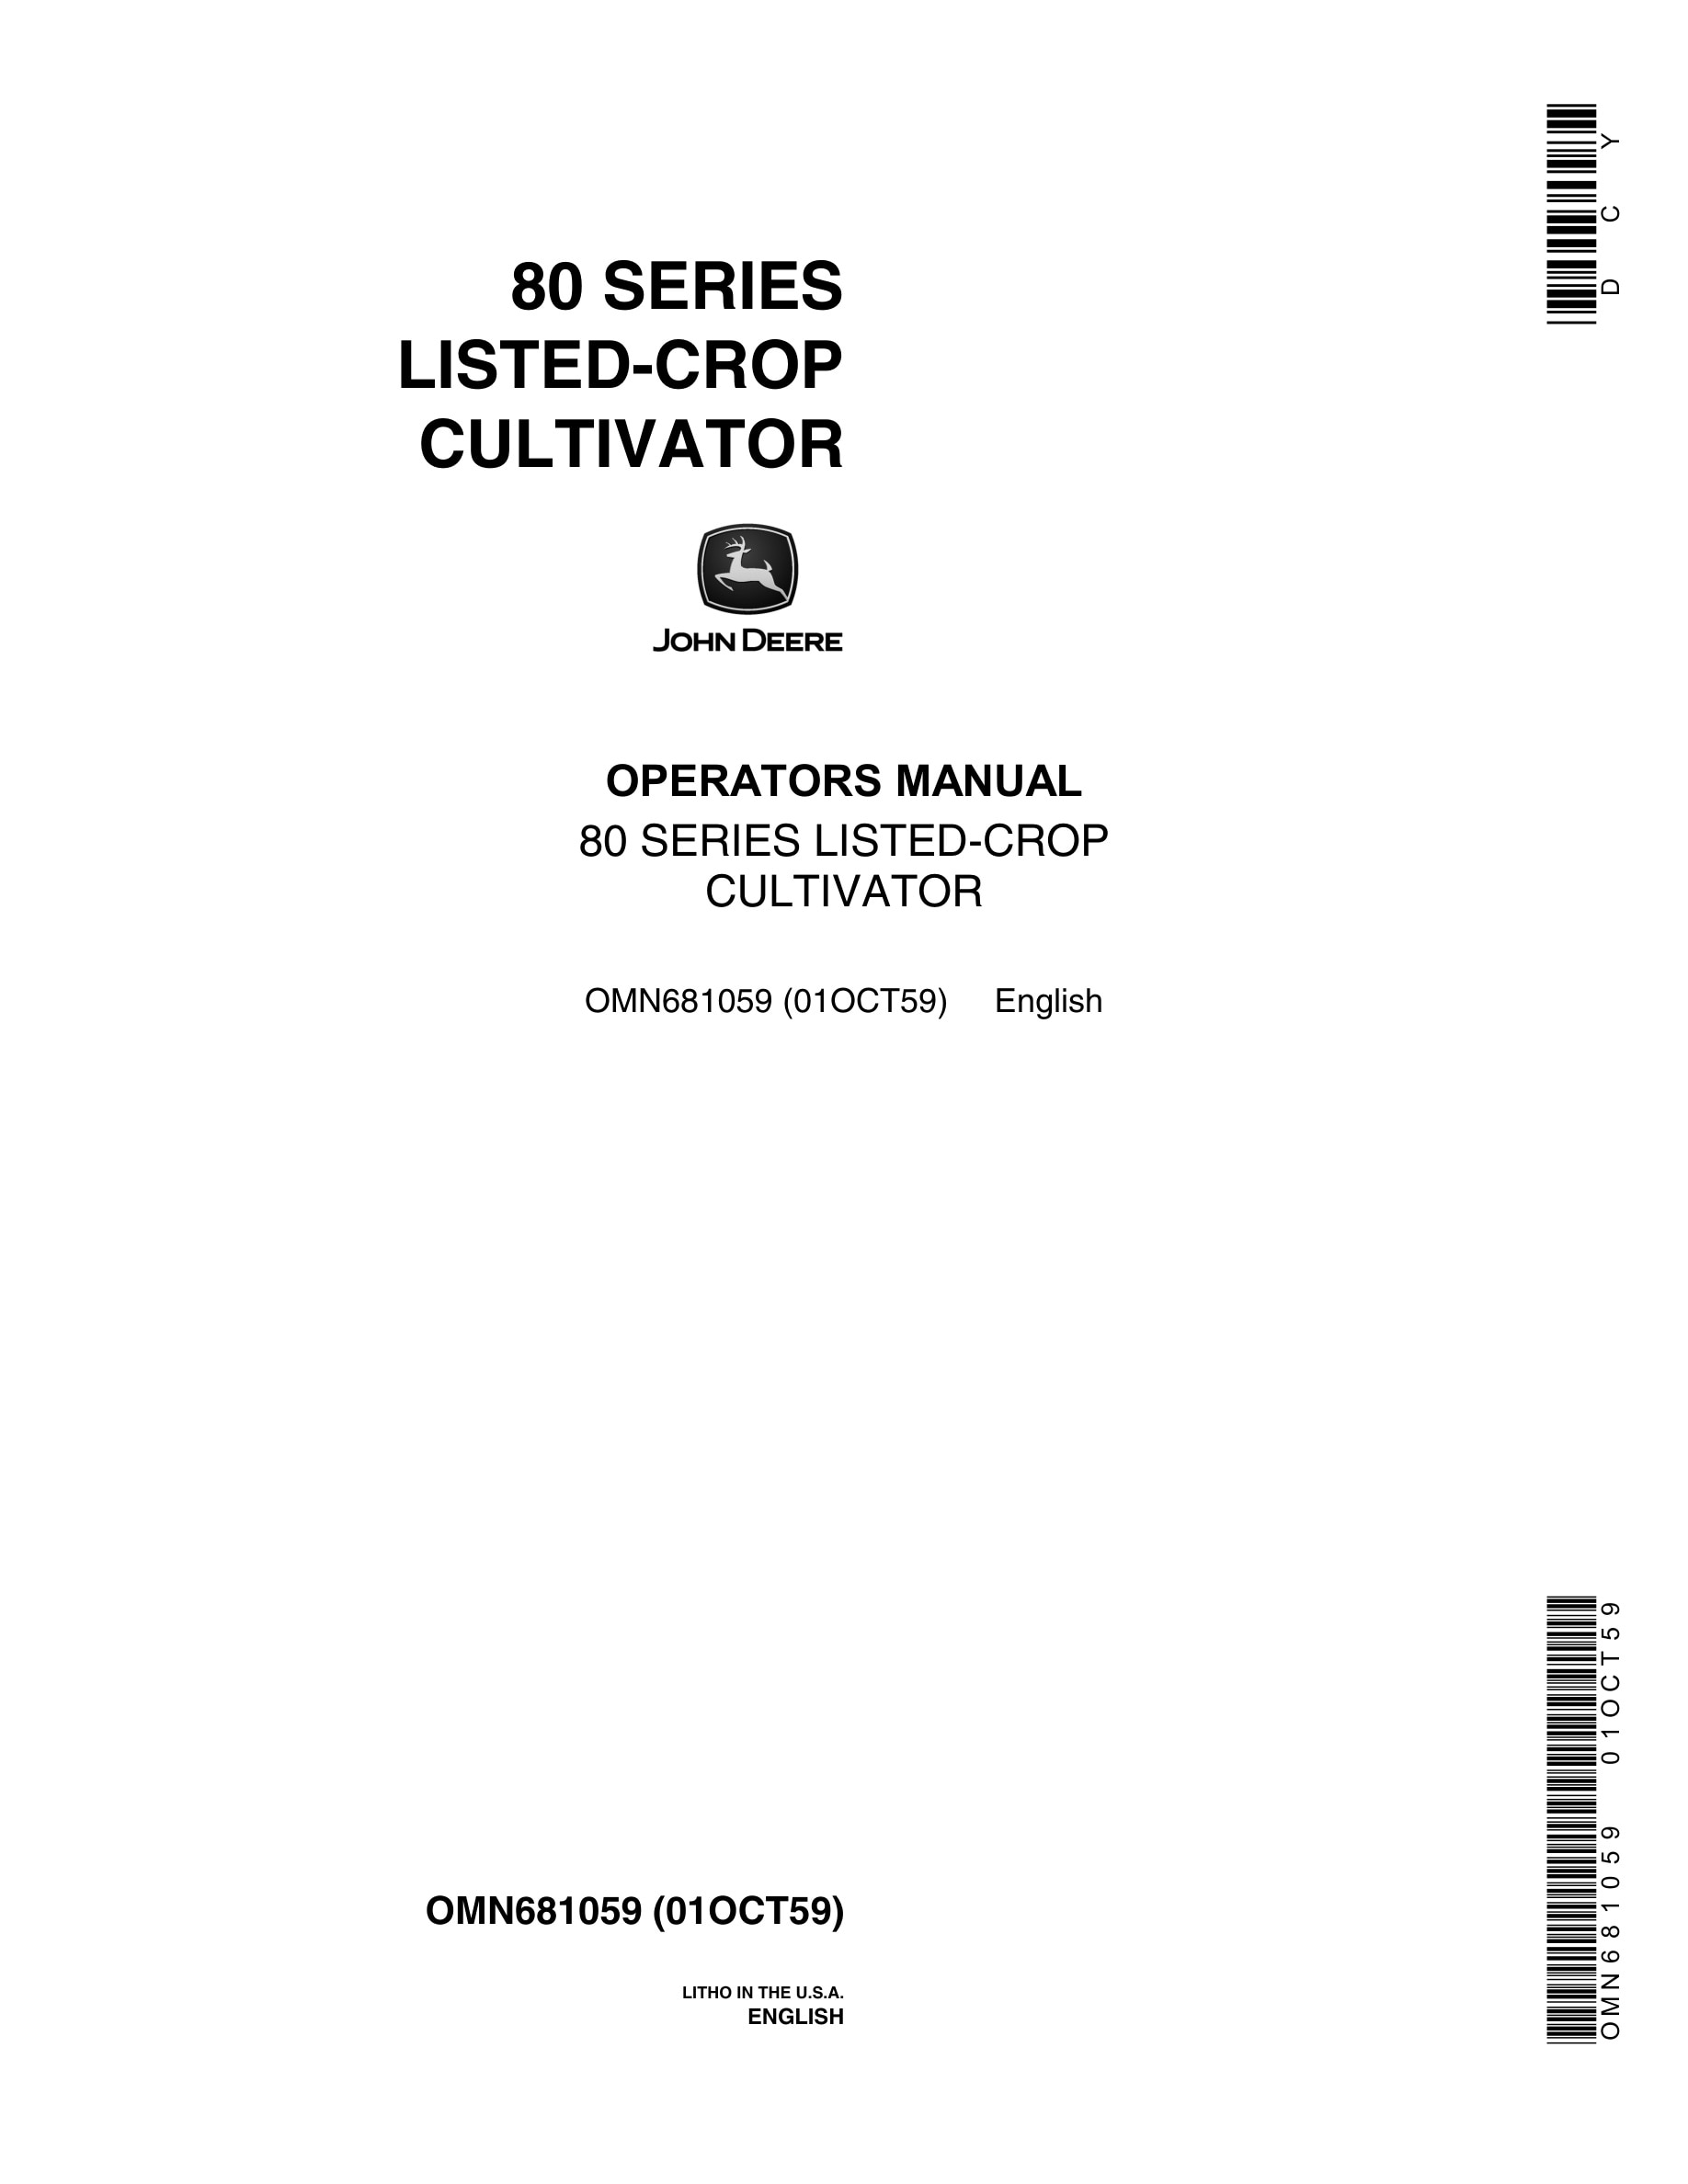 John Deere 80 SERIES LISTED-CROP CULTIVATOR Operator Manual OMN681059-1